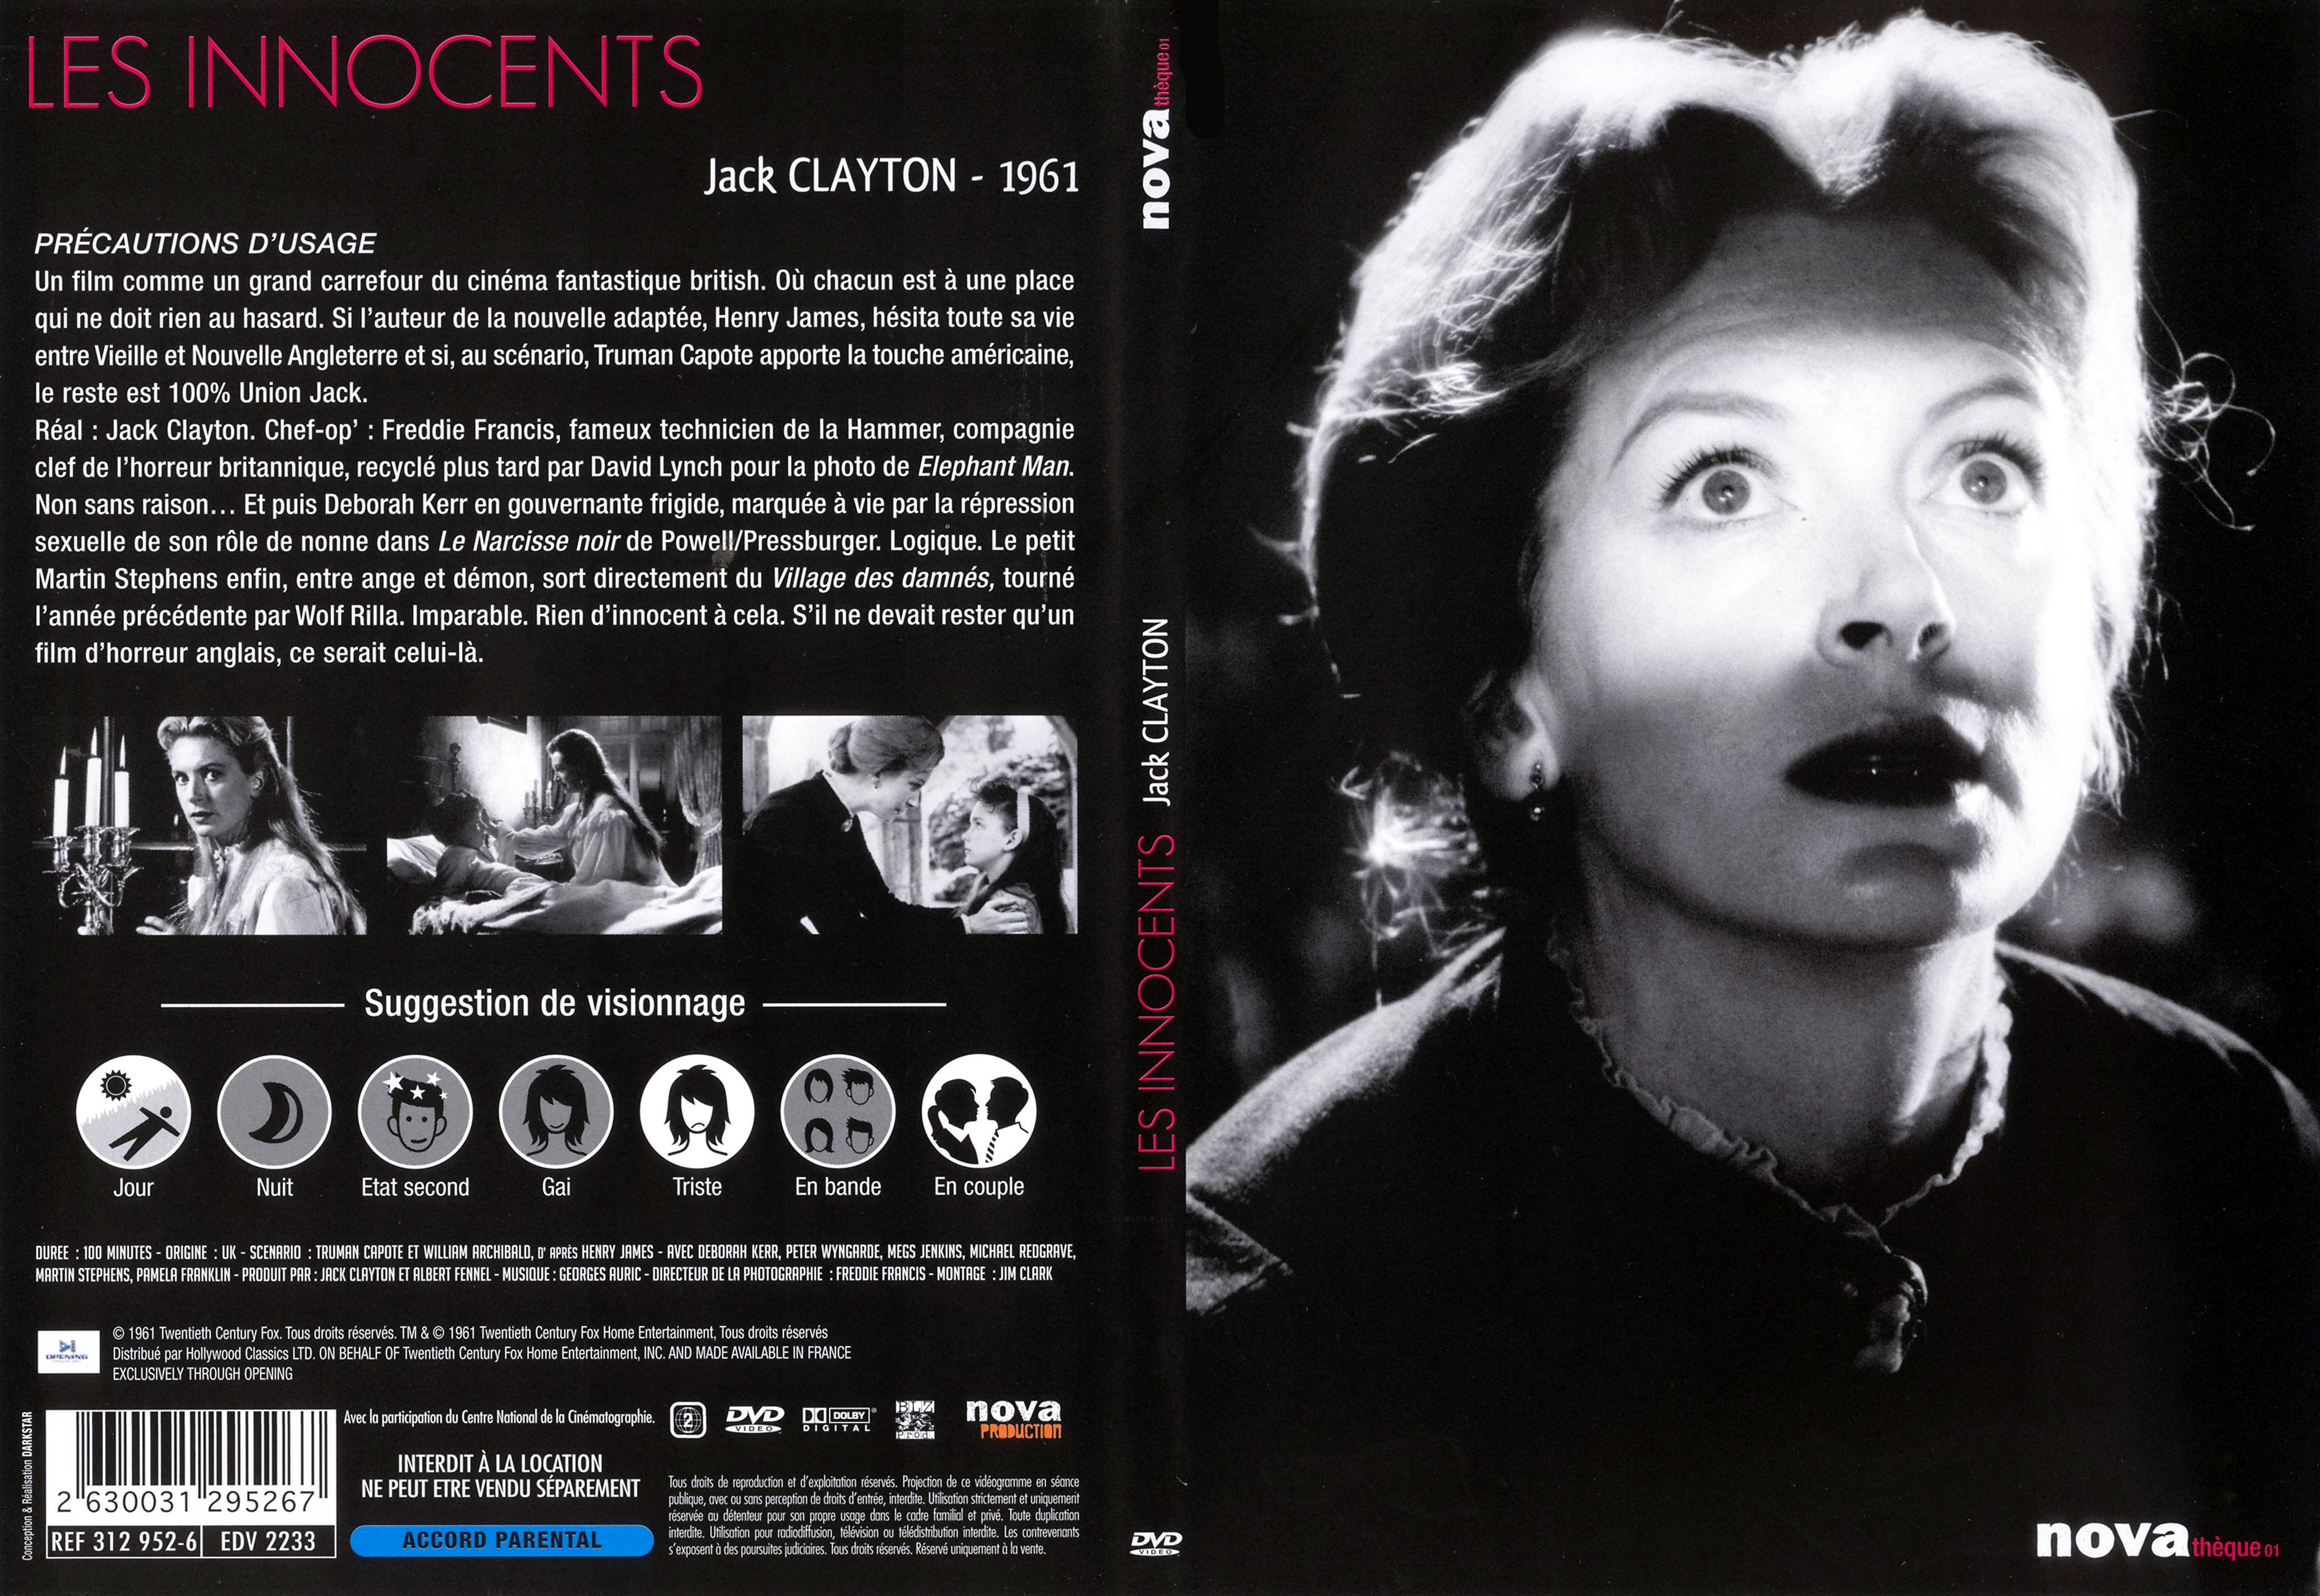 Jaquette DVD Les innocents v2